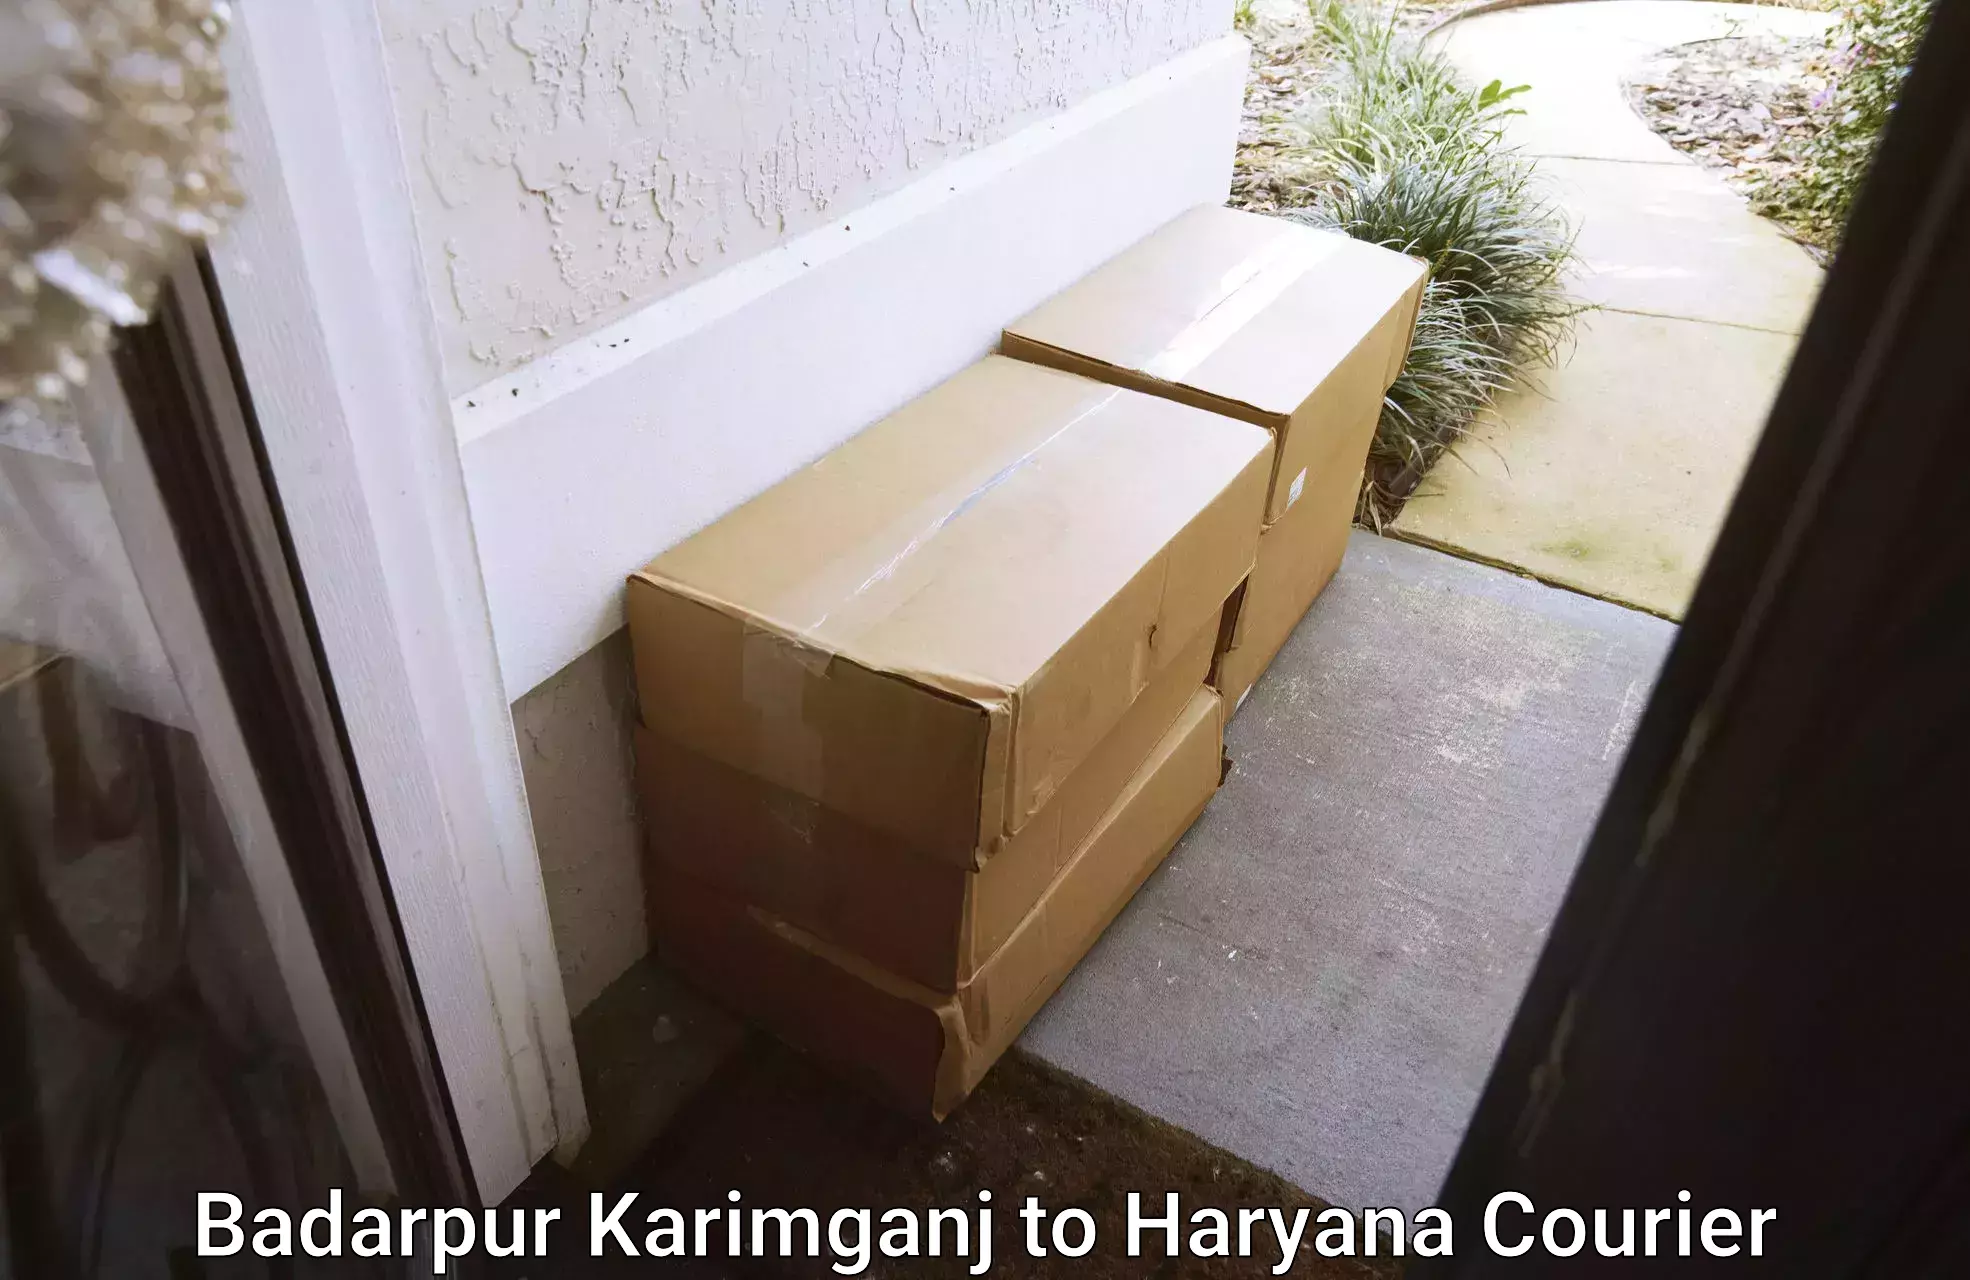 Cash on delivery service Badarpur Karimganj to Ambala